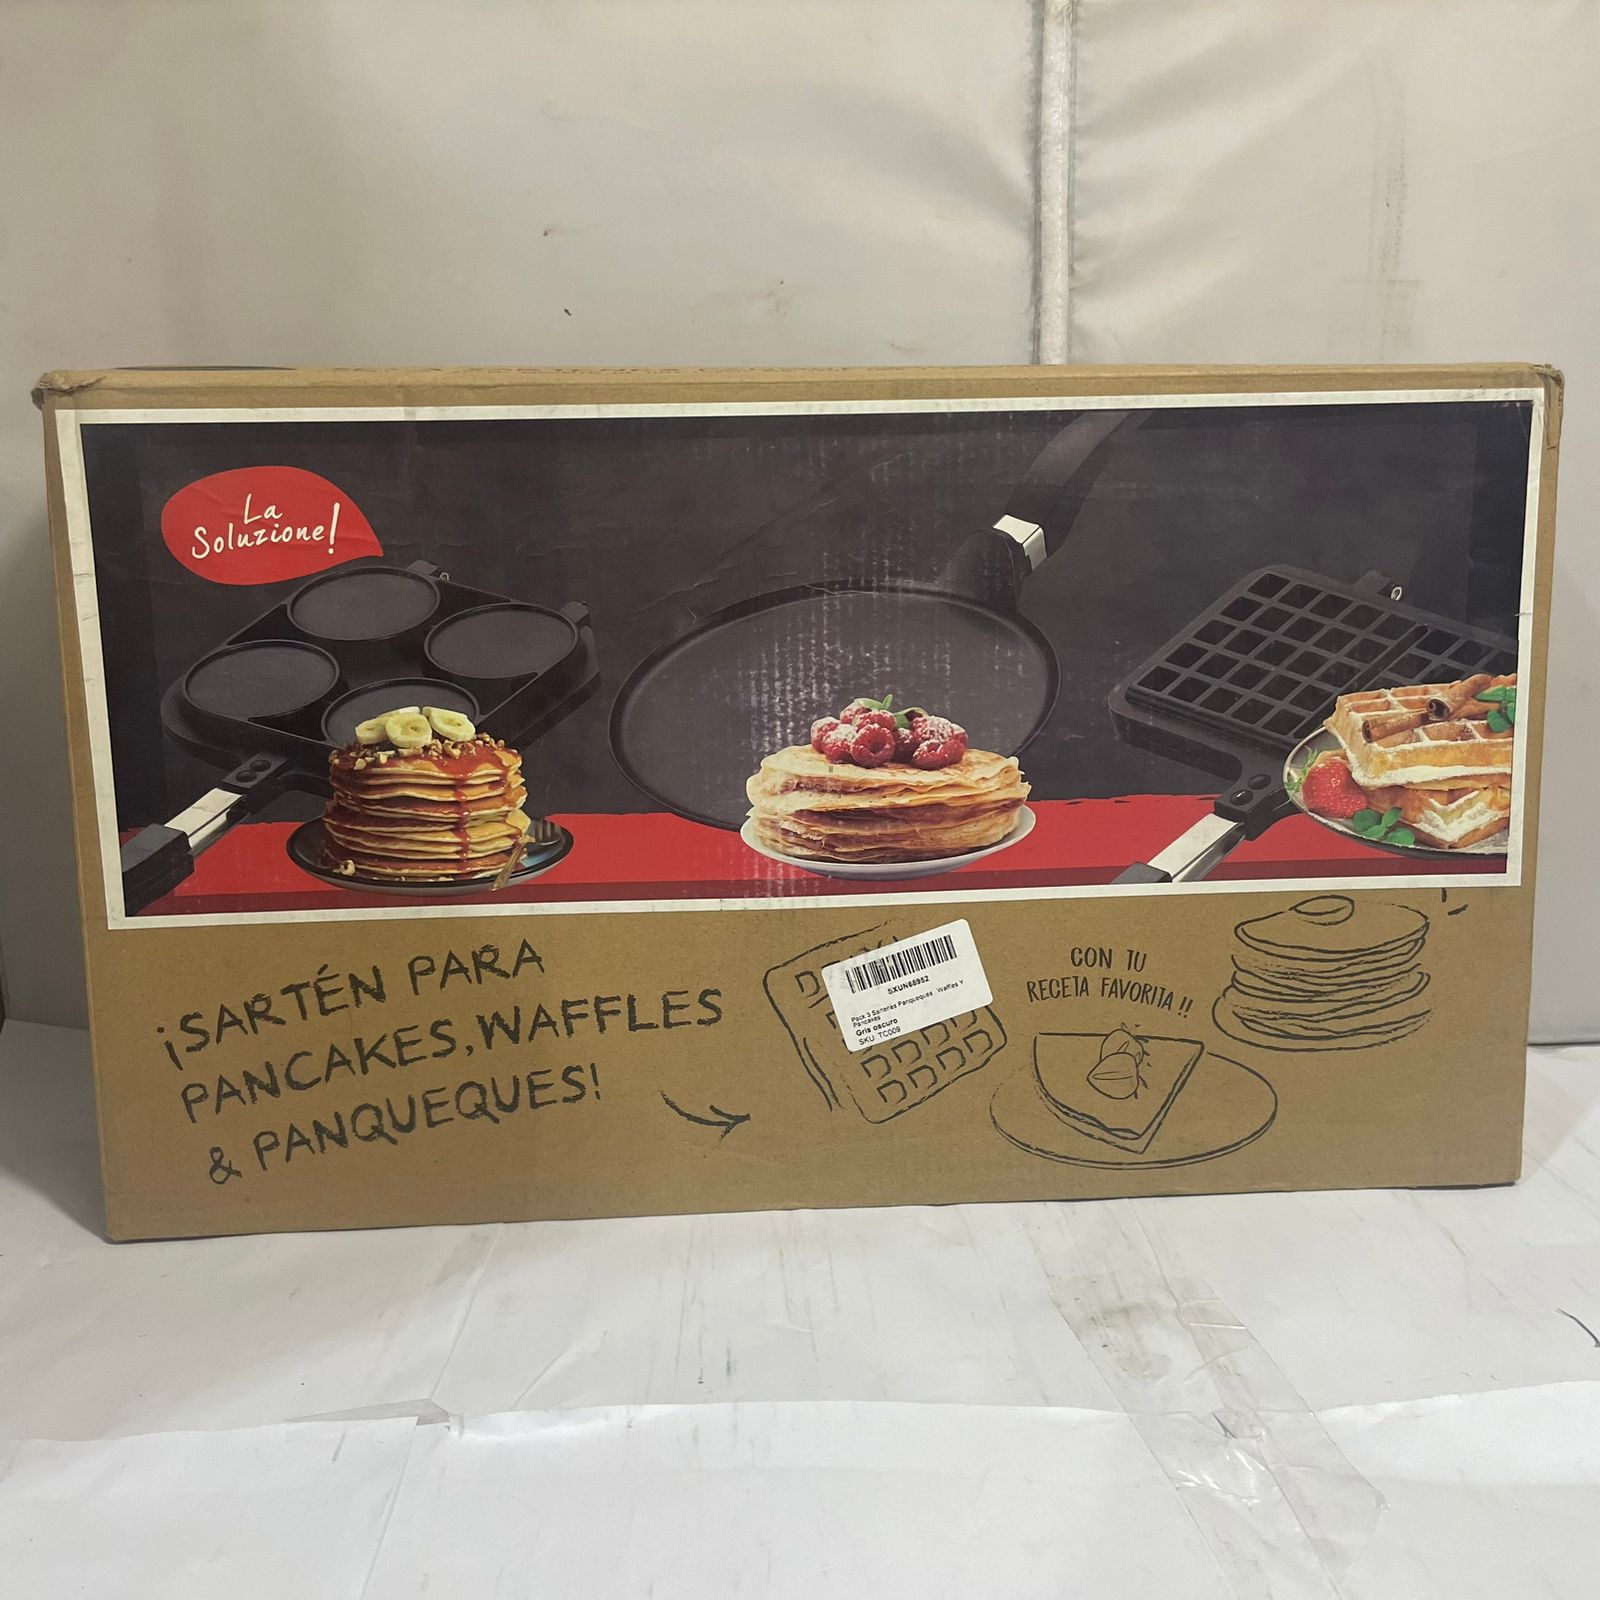 Pack Sarten Para Pancakes Waffles Y Panqueques La Soluzione Tc009[Openbox]